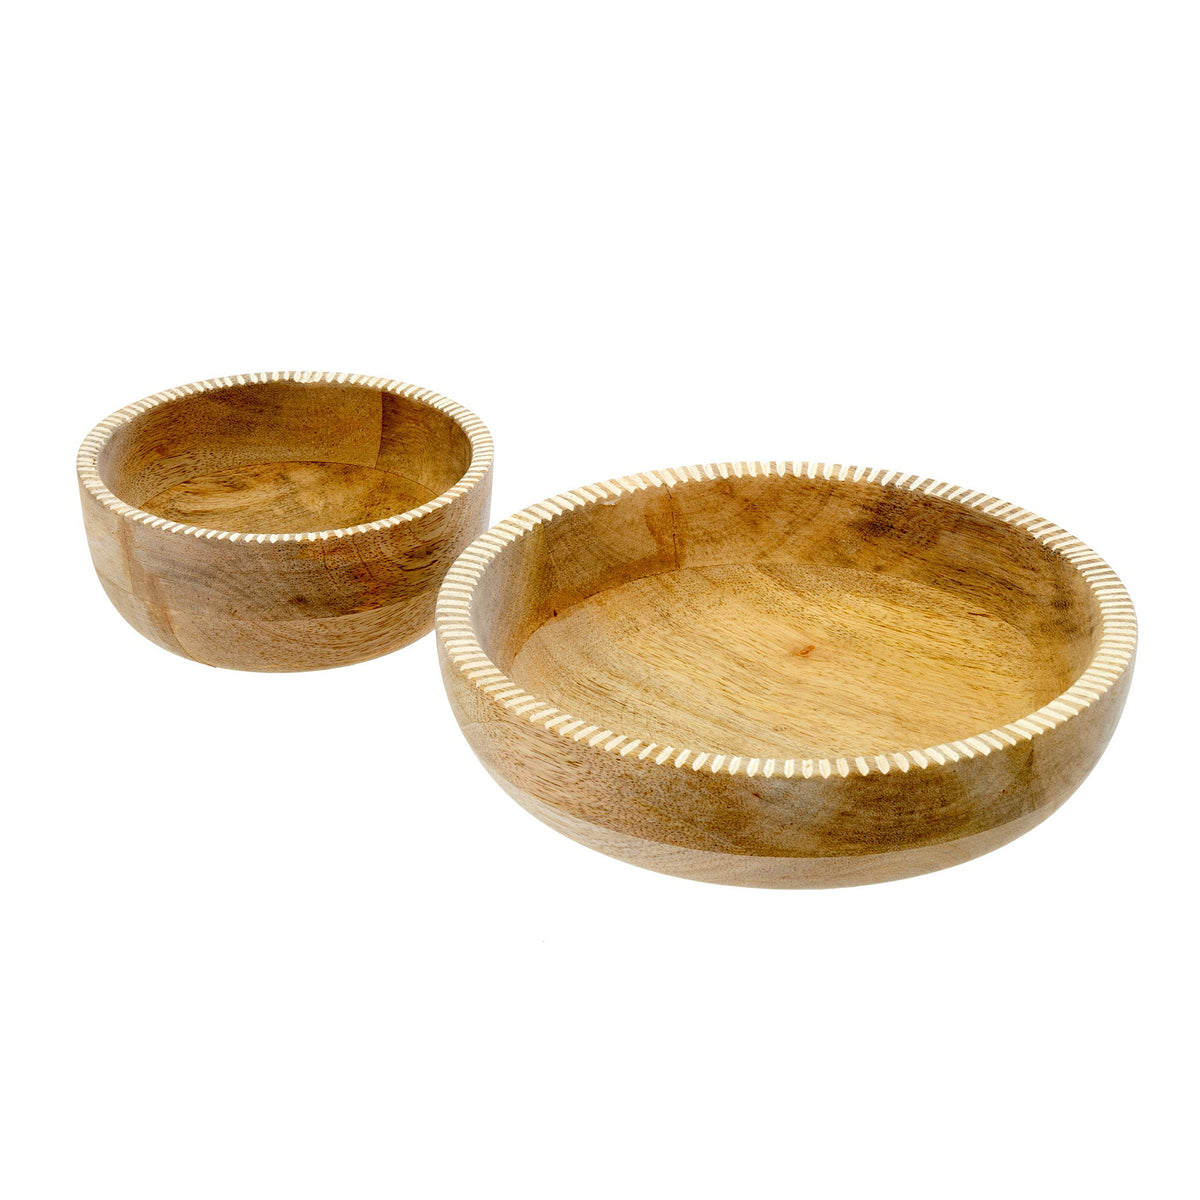 Lucca Wooden Bowls, Set of 2